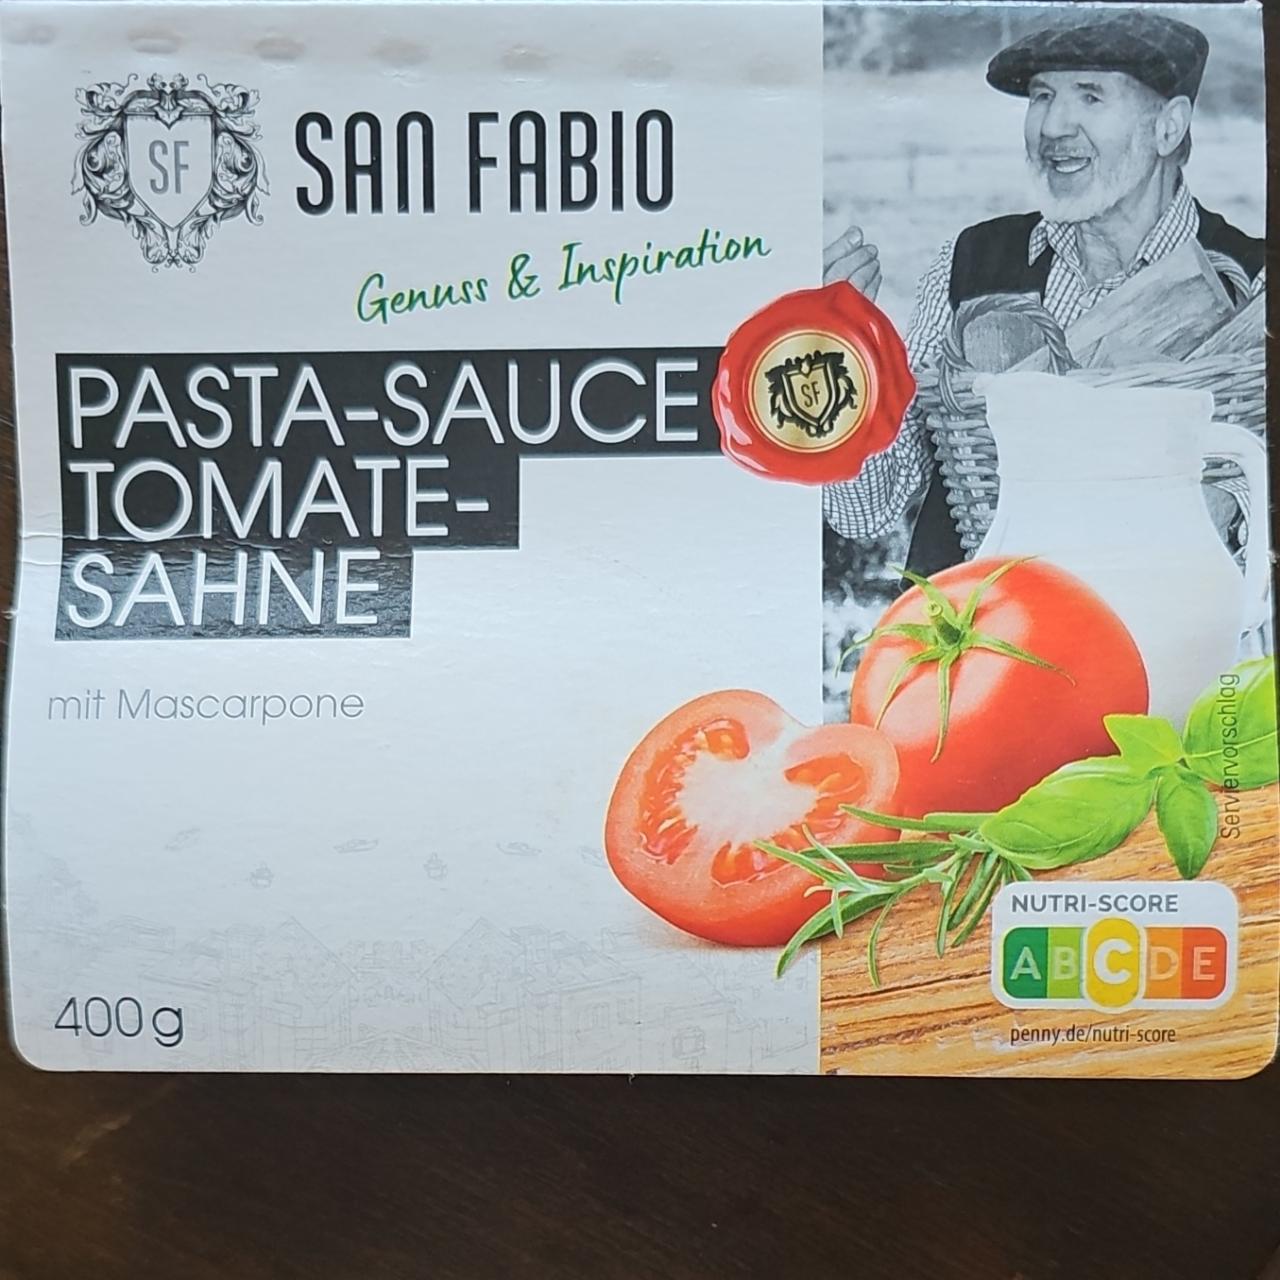 Fotografie - Pasta-Sauce Tomate-Sahne mit Mascarpone San Fabio